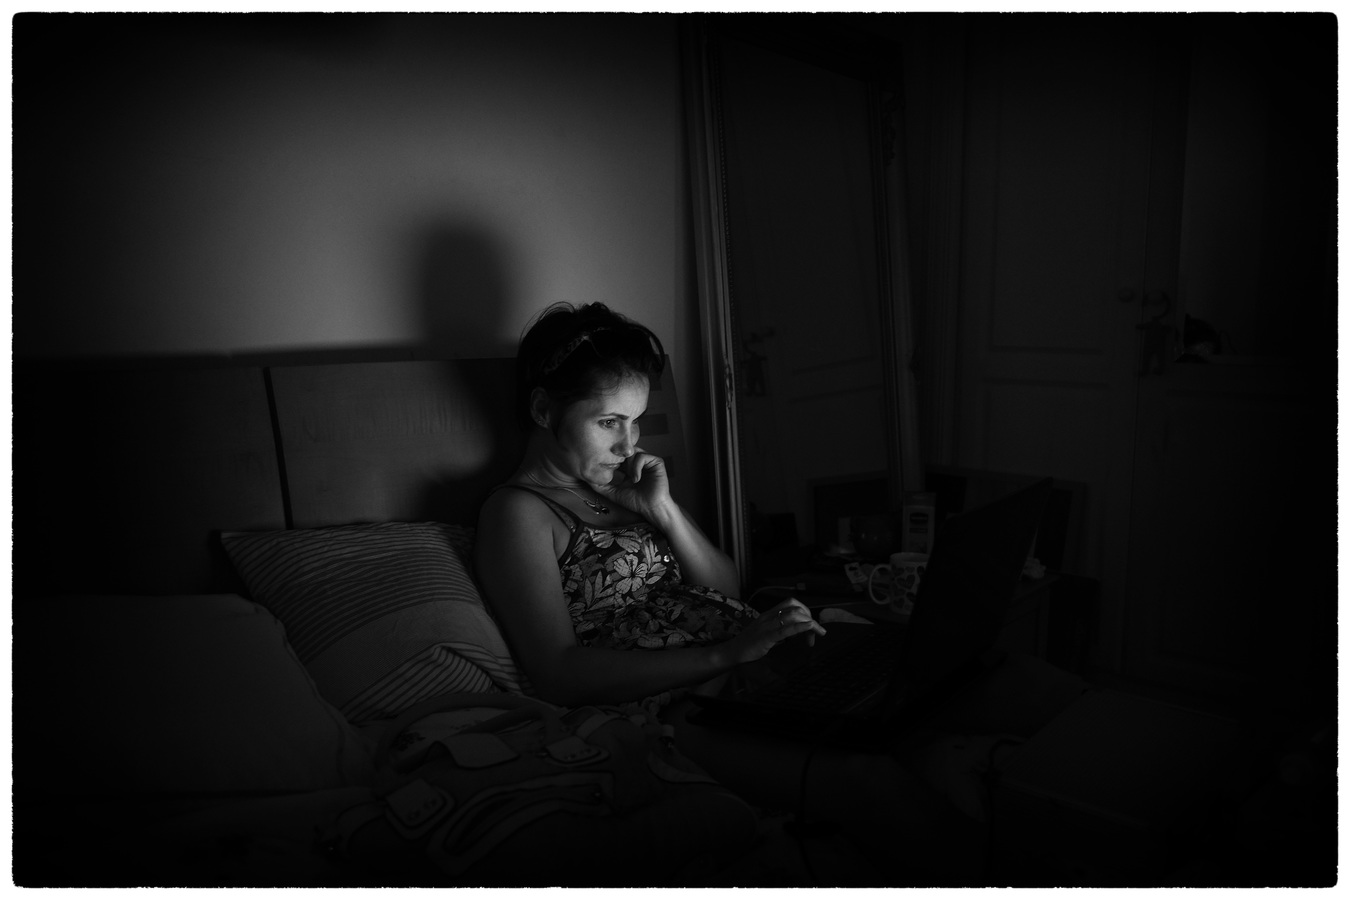 computer-screen-light-black-and-white-woman-photography-752775-pxhere.com.jpg